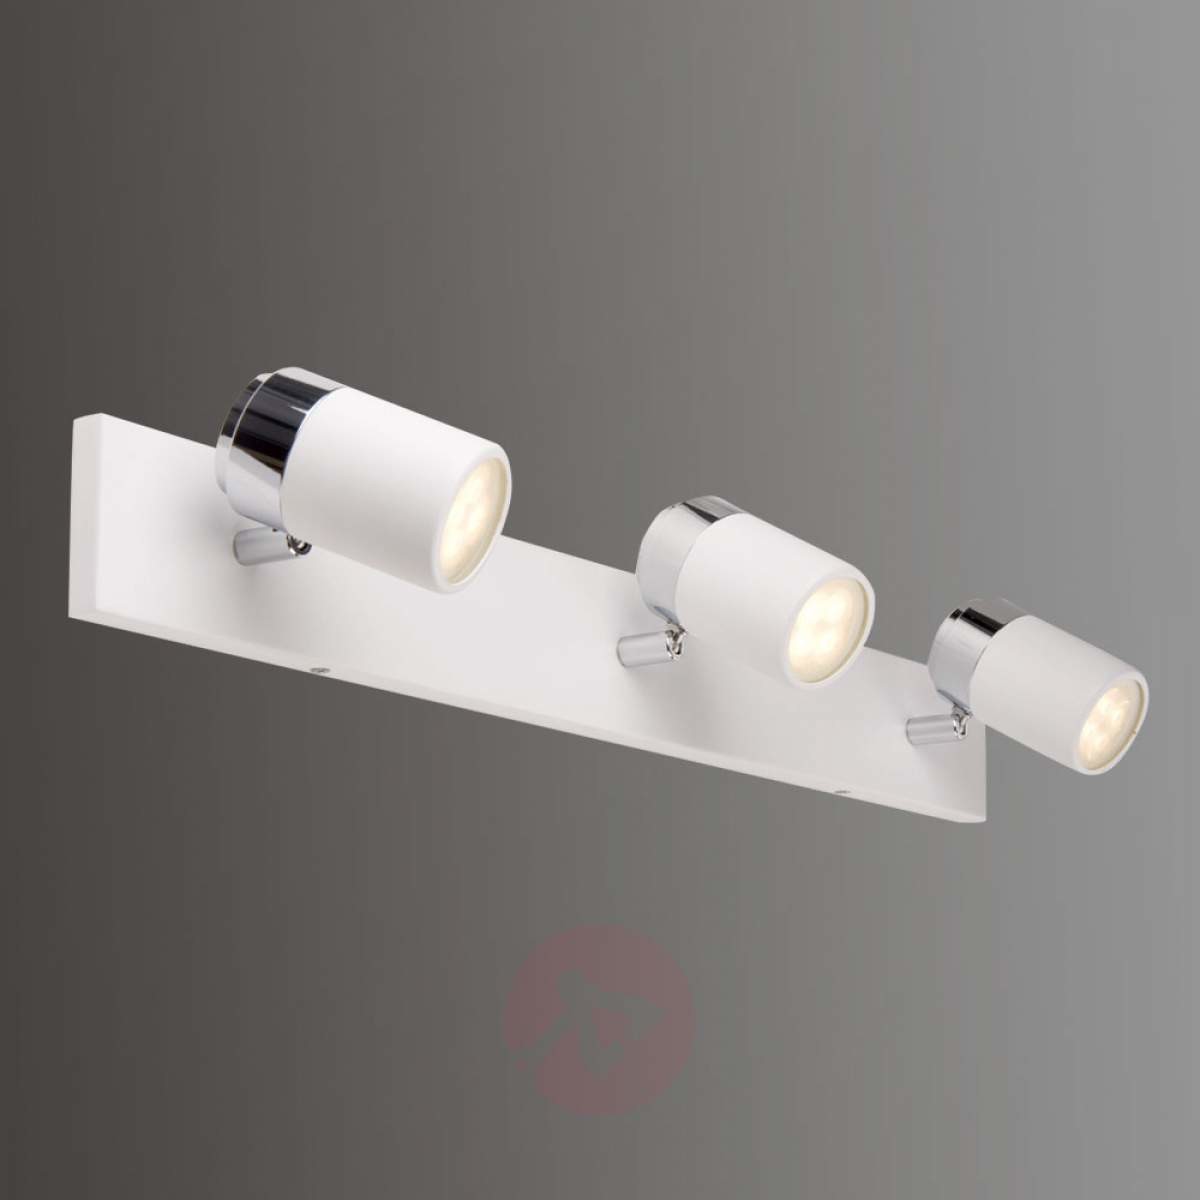 Lampenwelt 3-Punktowa łazienkowa lampa sufitowa Kardo, biała